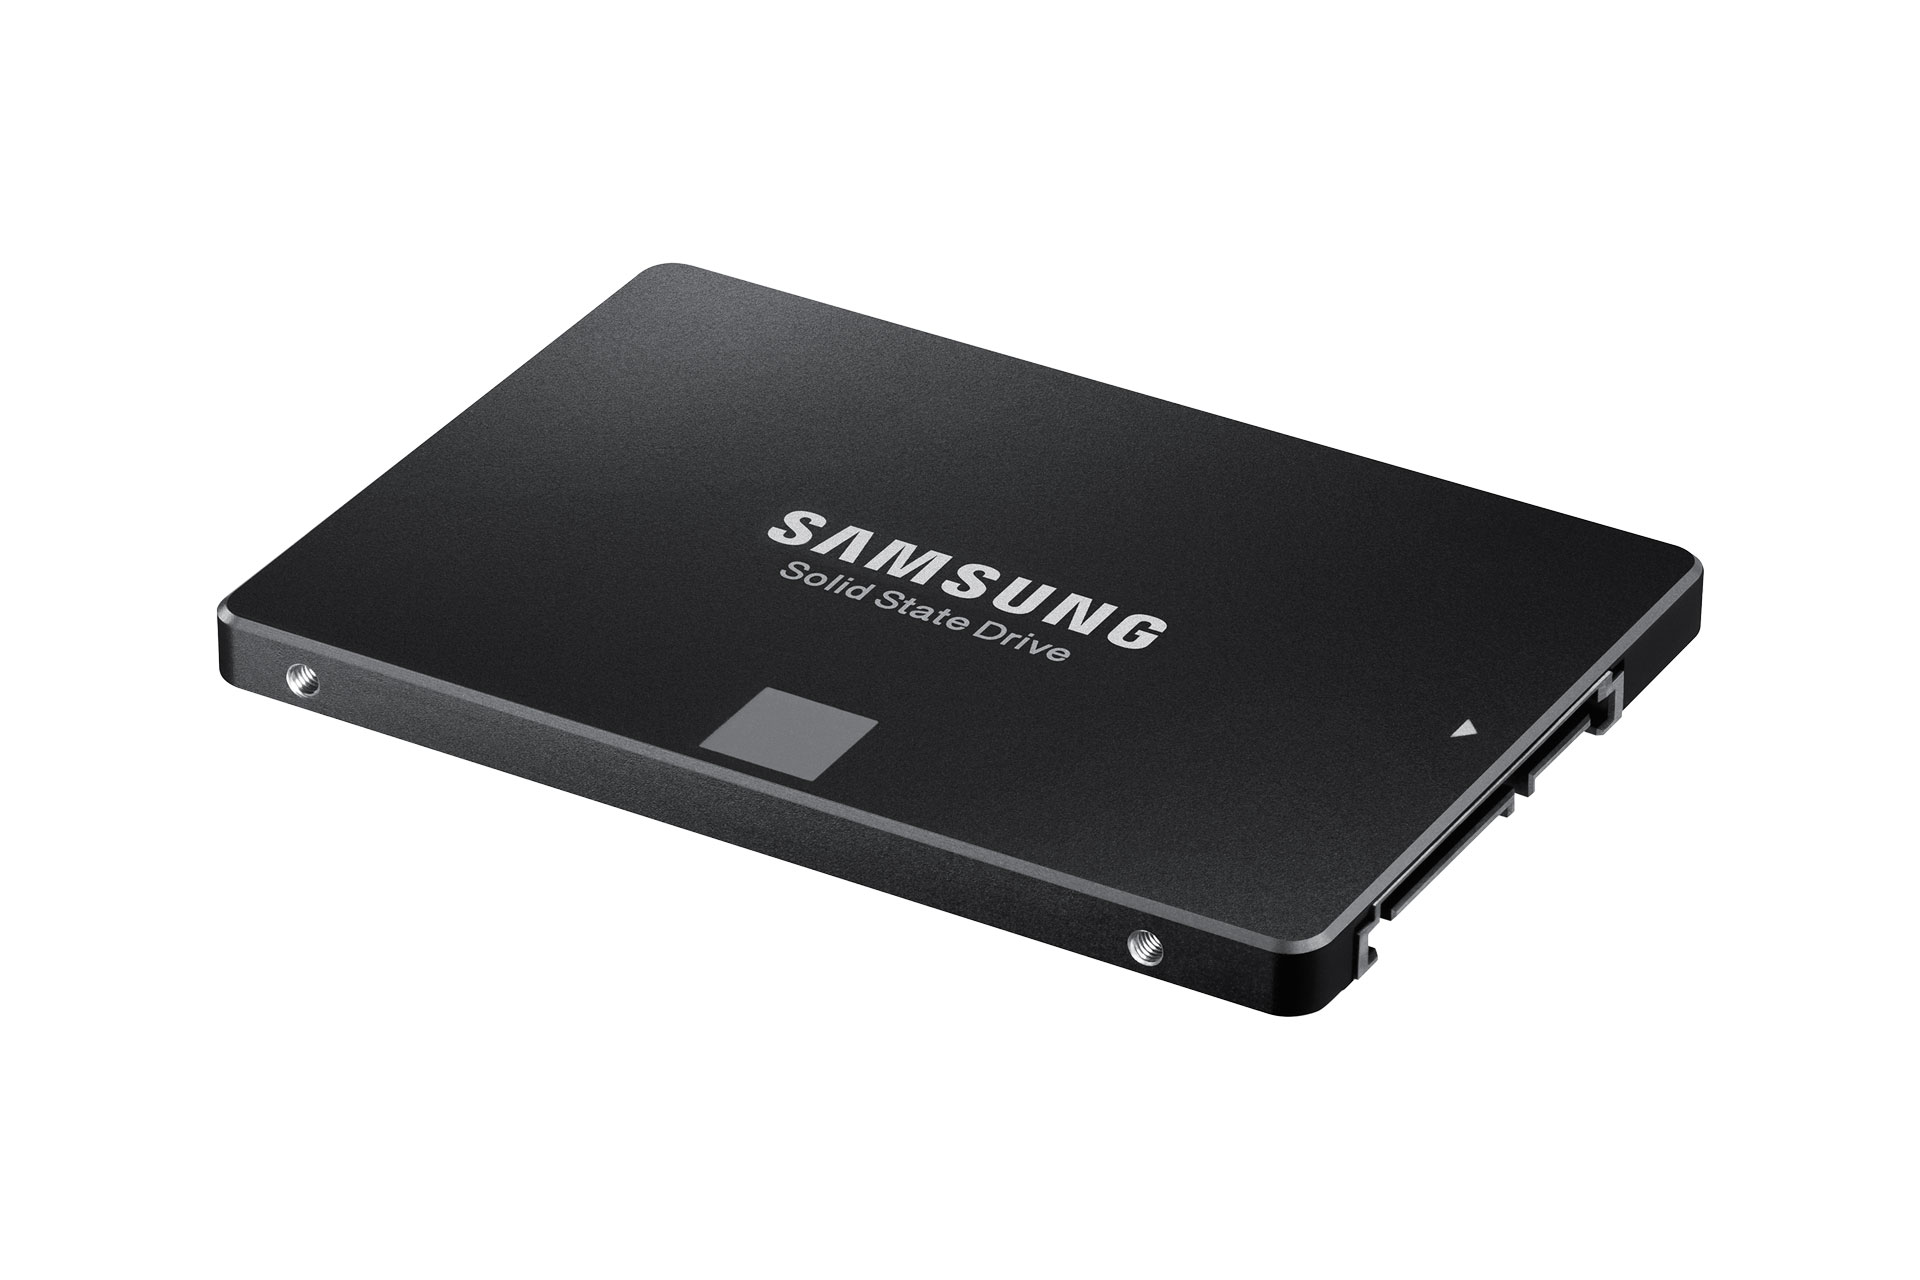 Samsung SSD 850 Evo - Angewinkelt